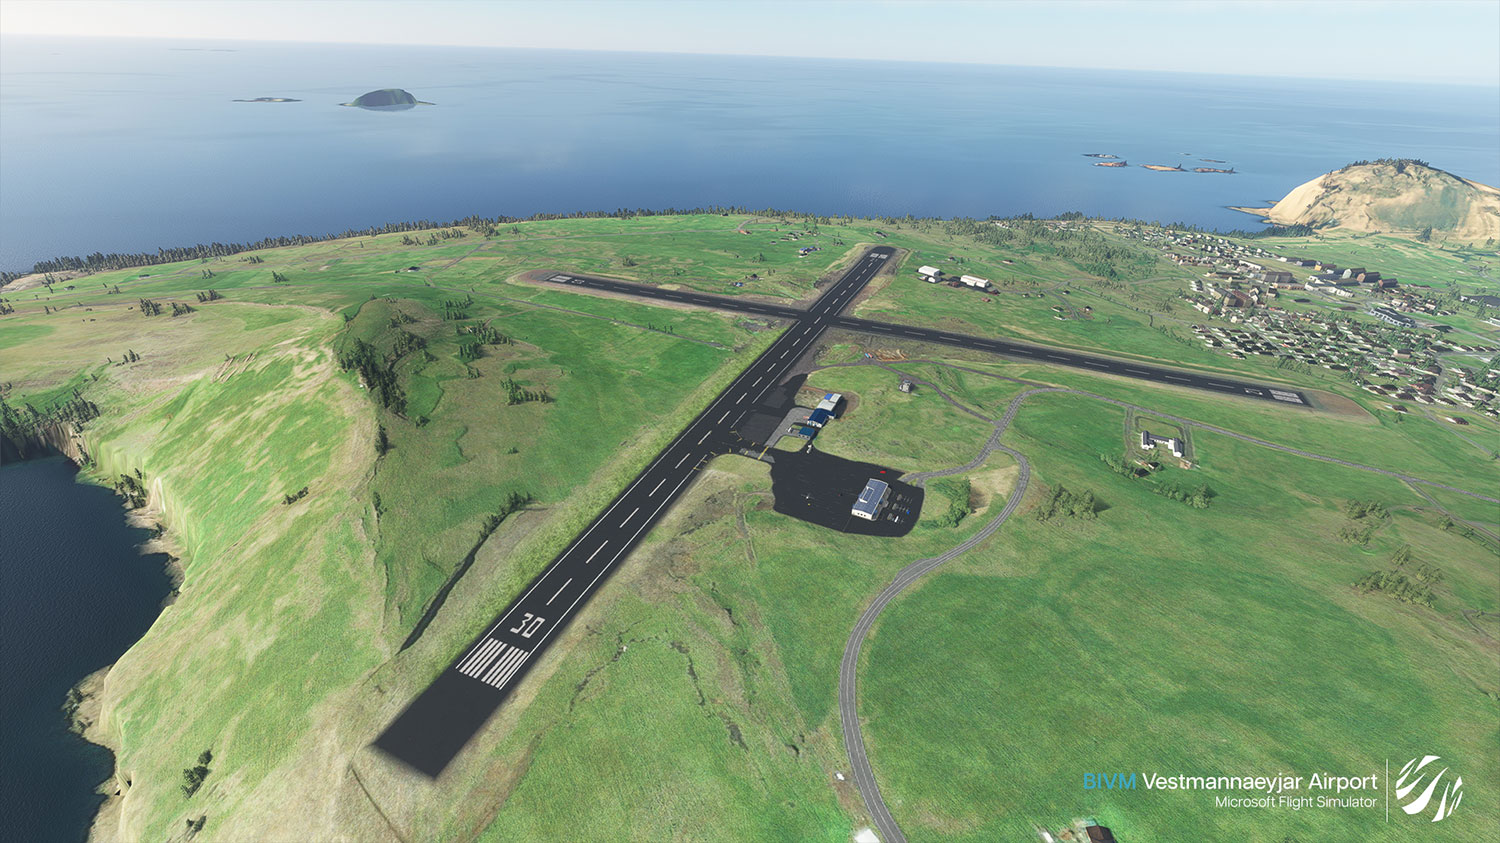 M'M Simulations - BIVM - Vestmannaeyjar Airport